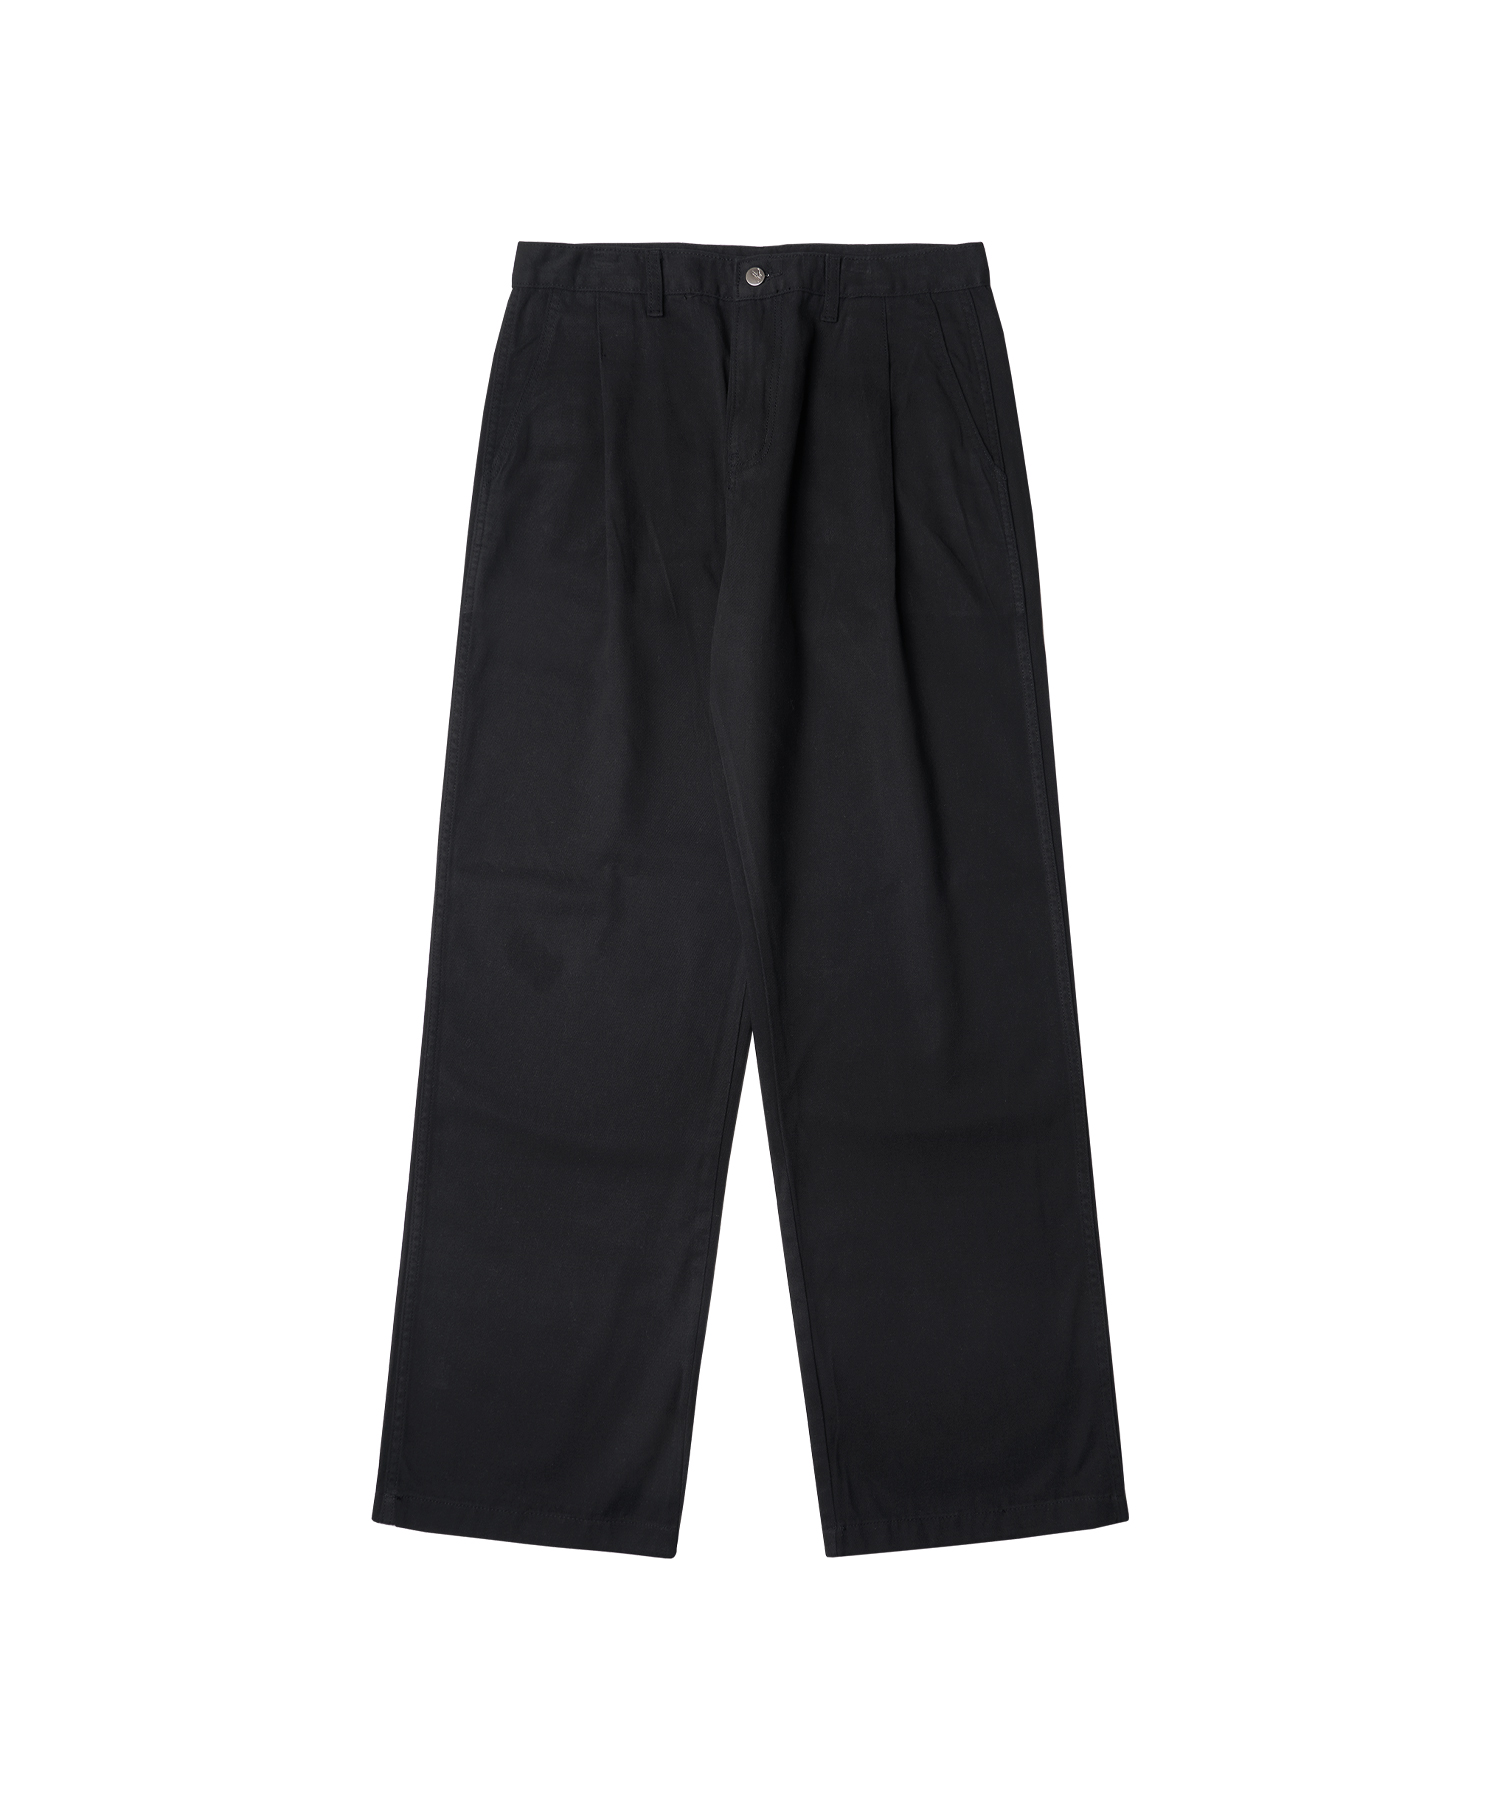 P10028 One-tuck wide pants_Black